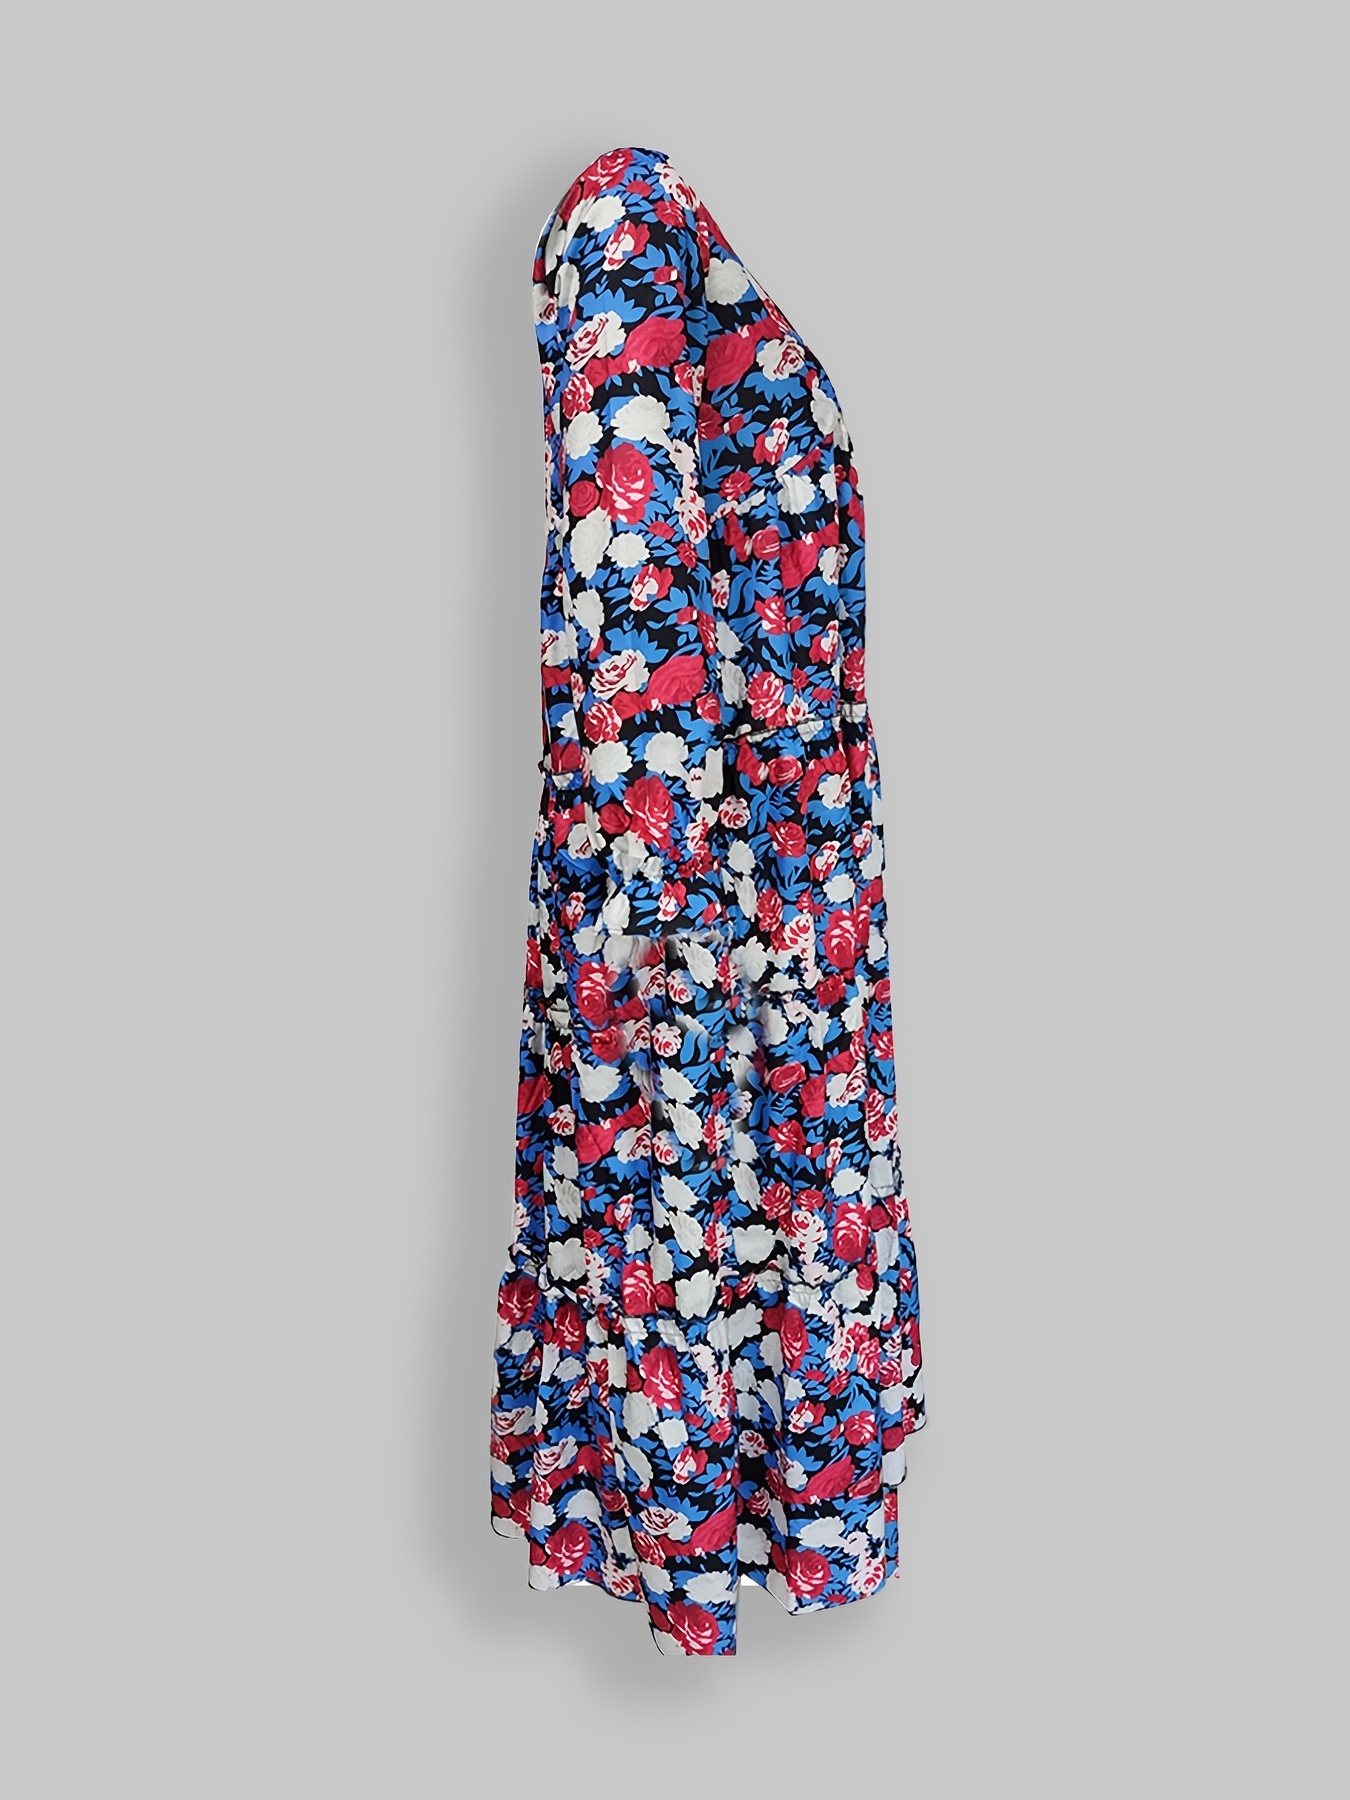 elegant v neck loose dress floral print long sleeve high waist summer dresses womens clothing